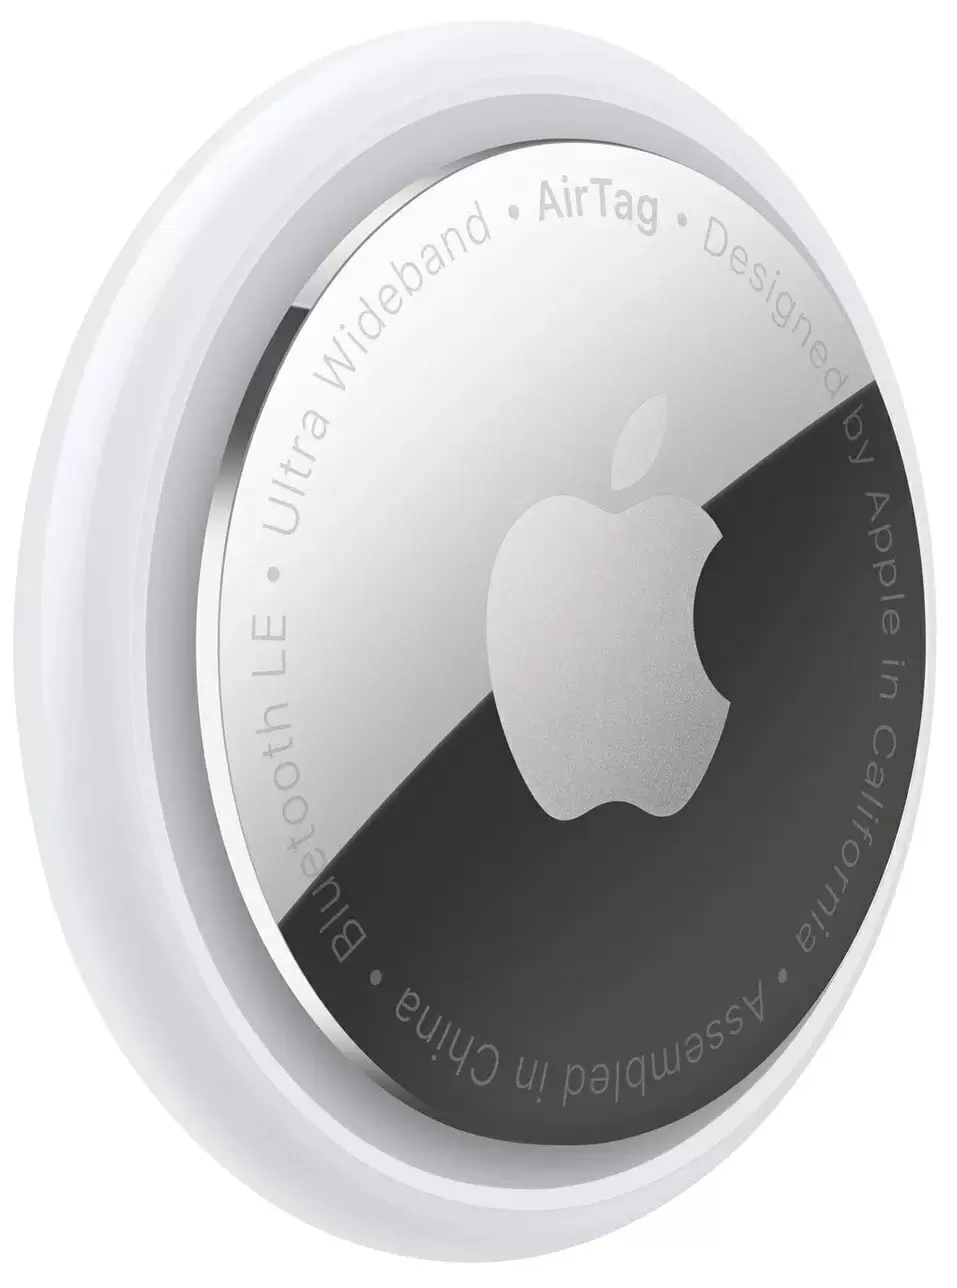 Tracker Apple AirTag (1 Pack)